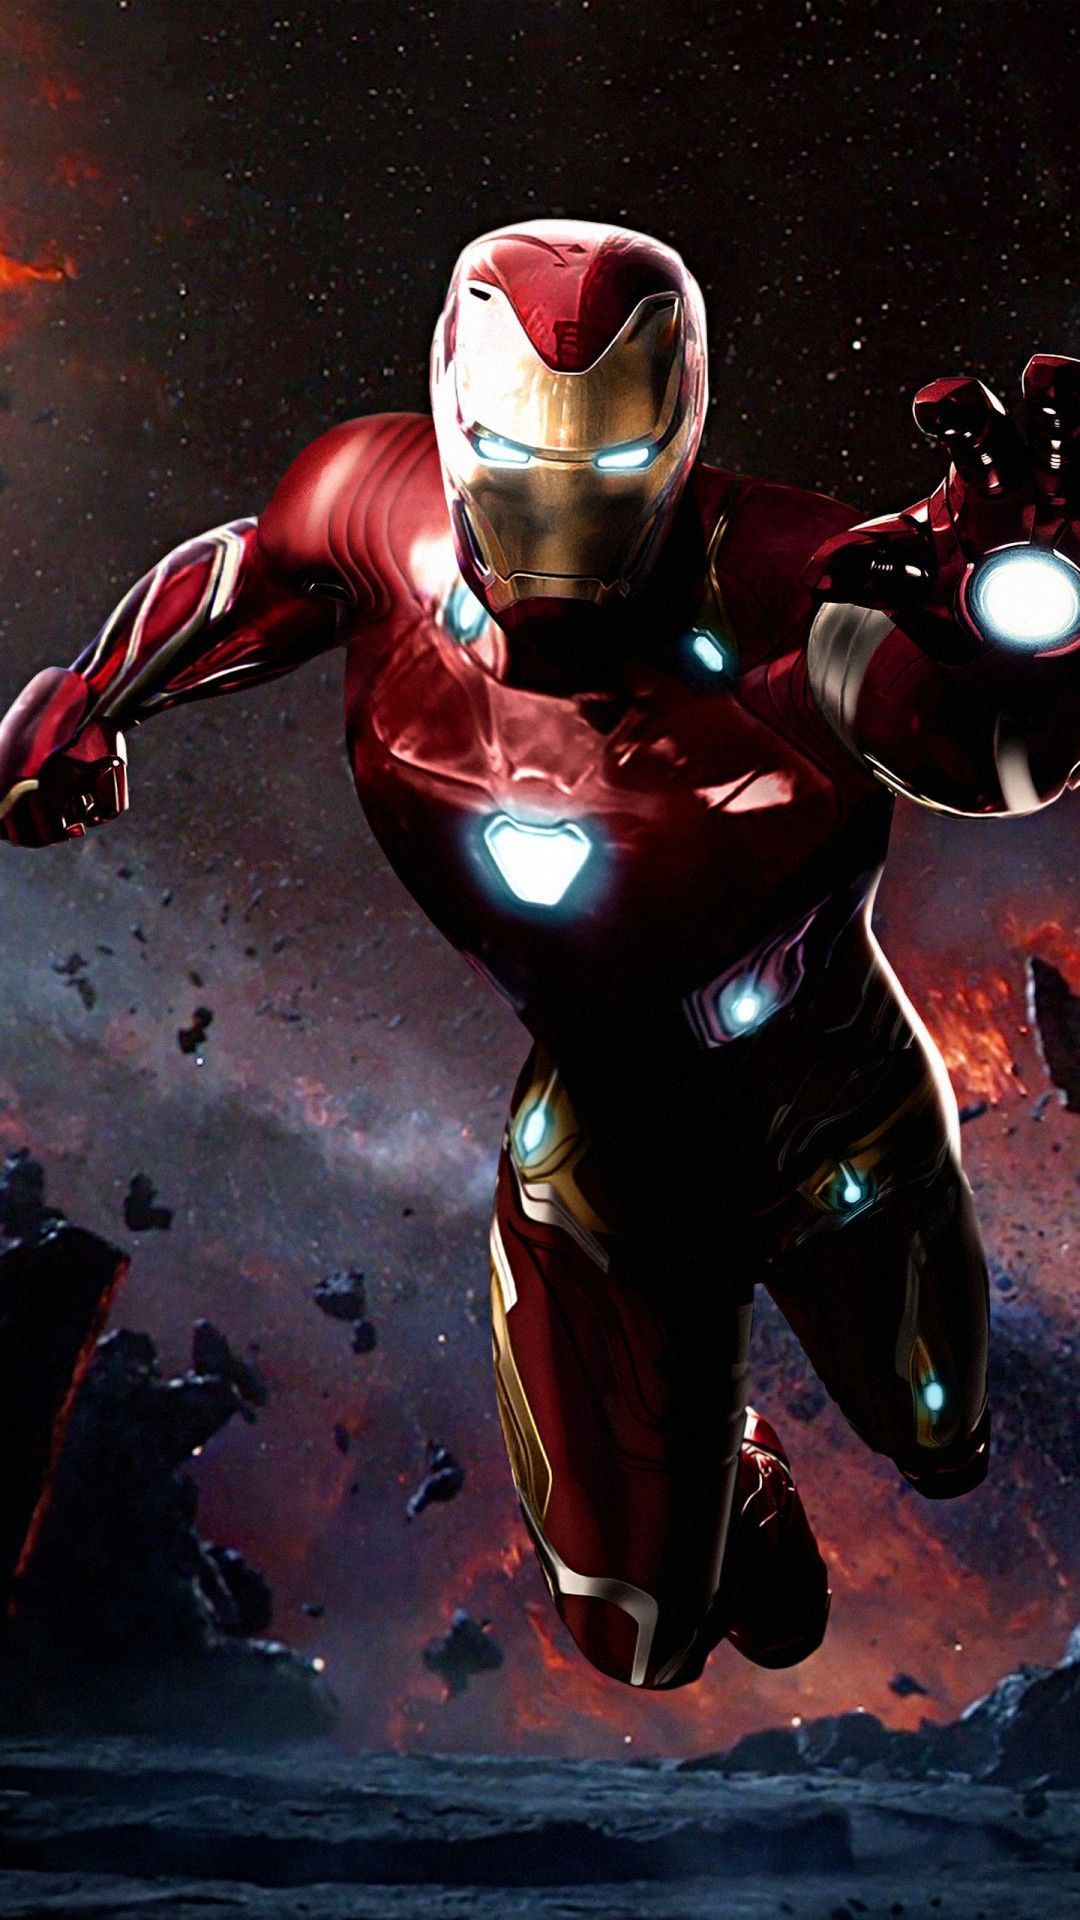 Iron Man iPhone X Wallpaper